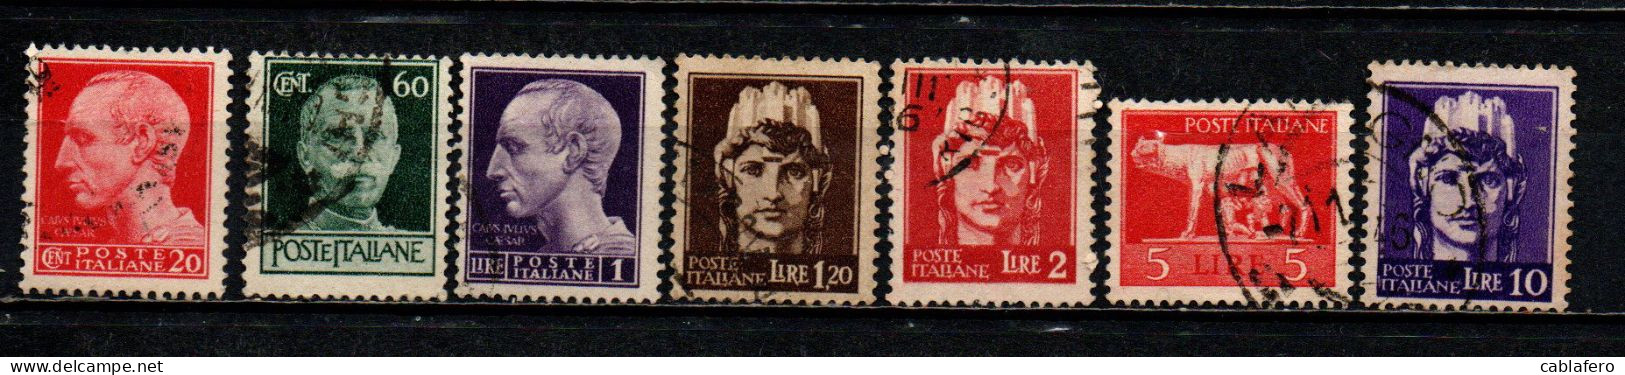 ITALIA LUOGOTENENZA - 1945 - SERIE IMPERIALE SENZA FASCIO - FIL. RUOTA - USATI - Oblitérés